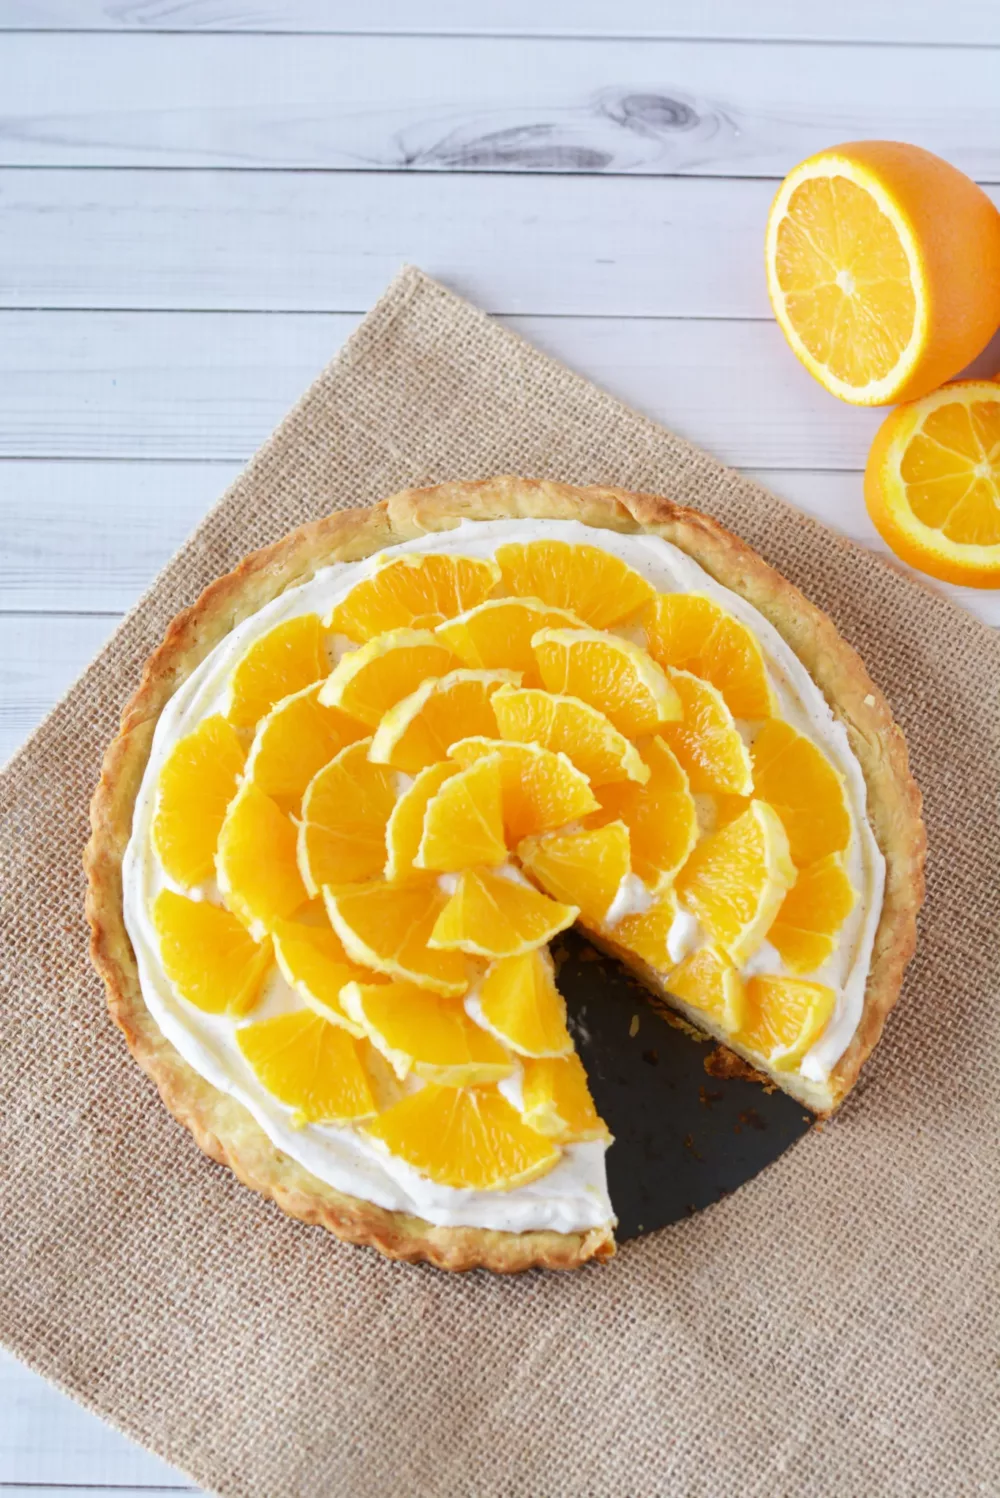 Orange Clove Tart Recipe